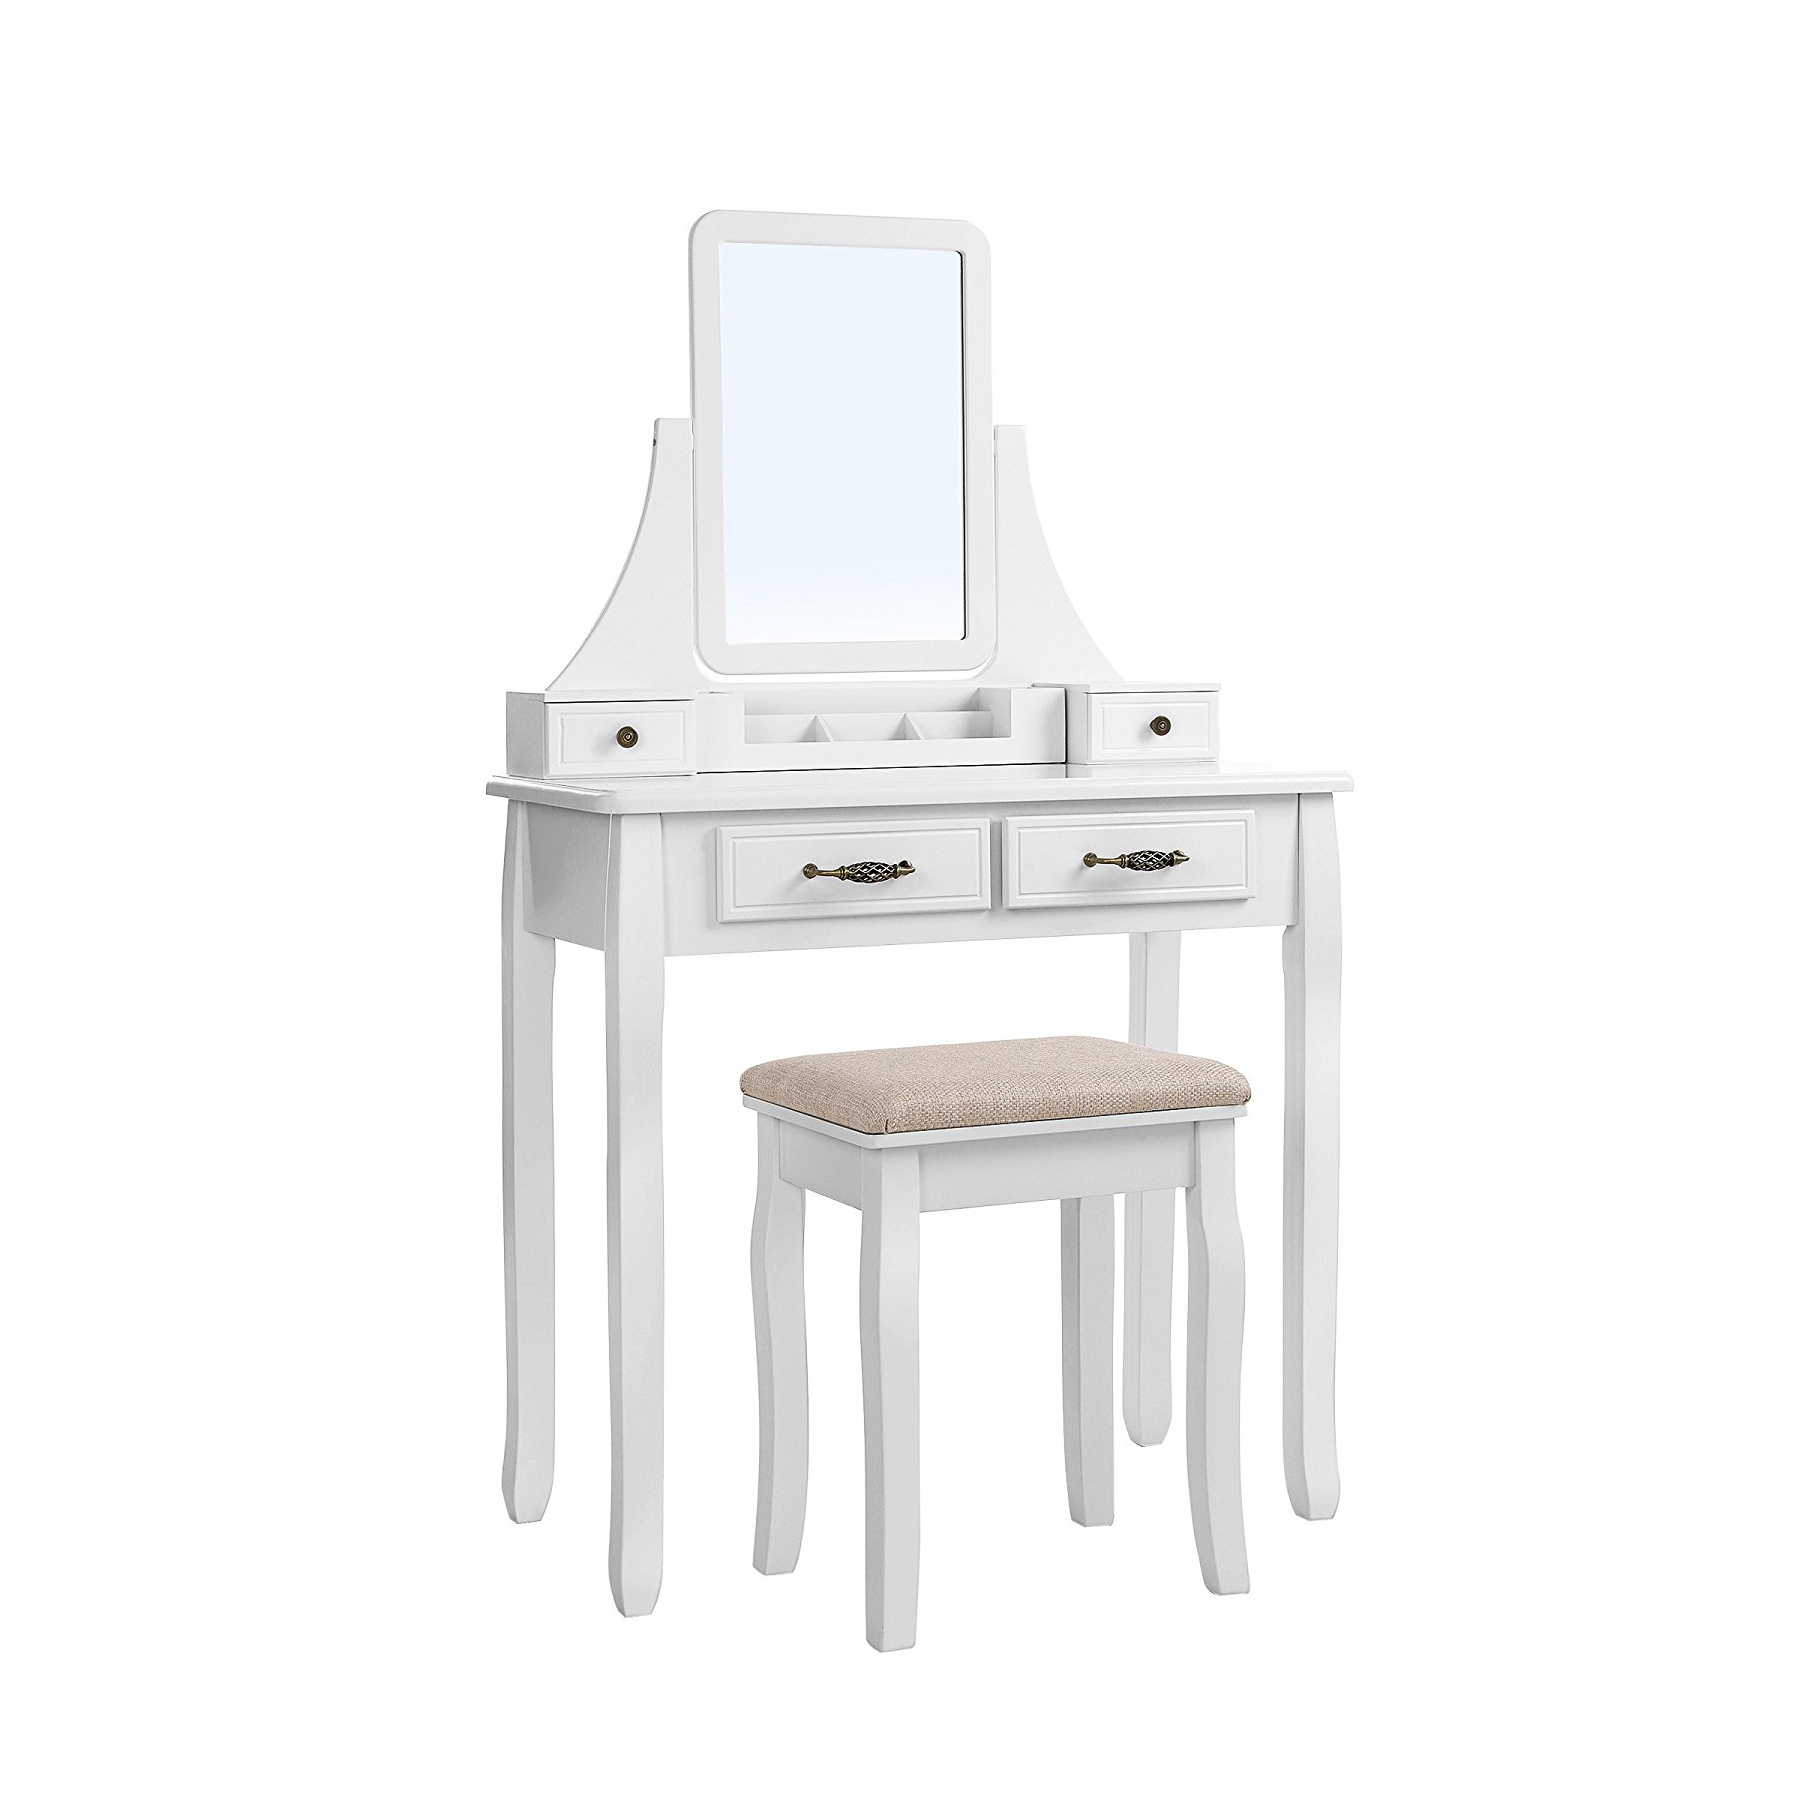 wholesale white wardrobe wooden cupboard designs of bedroom